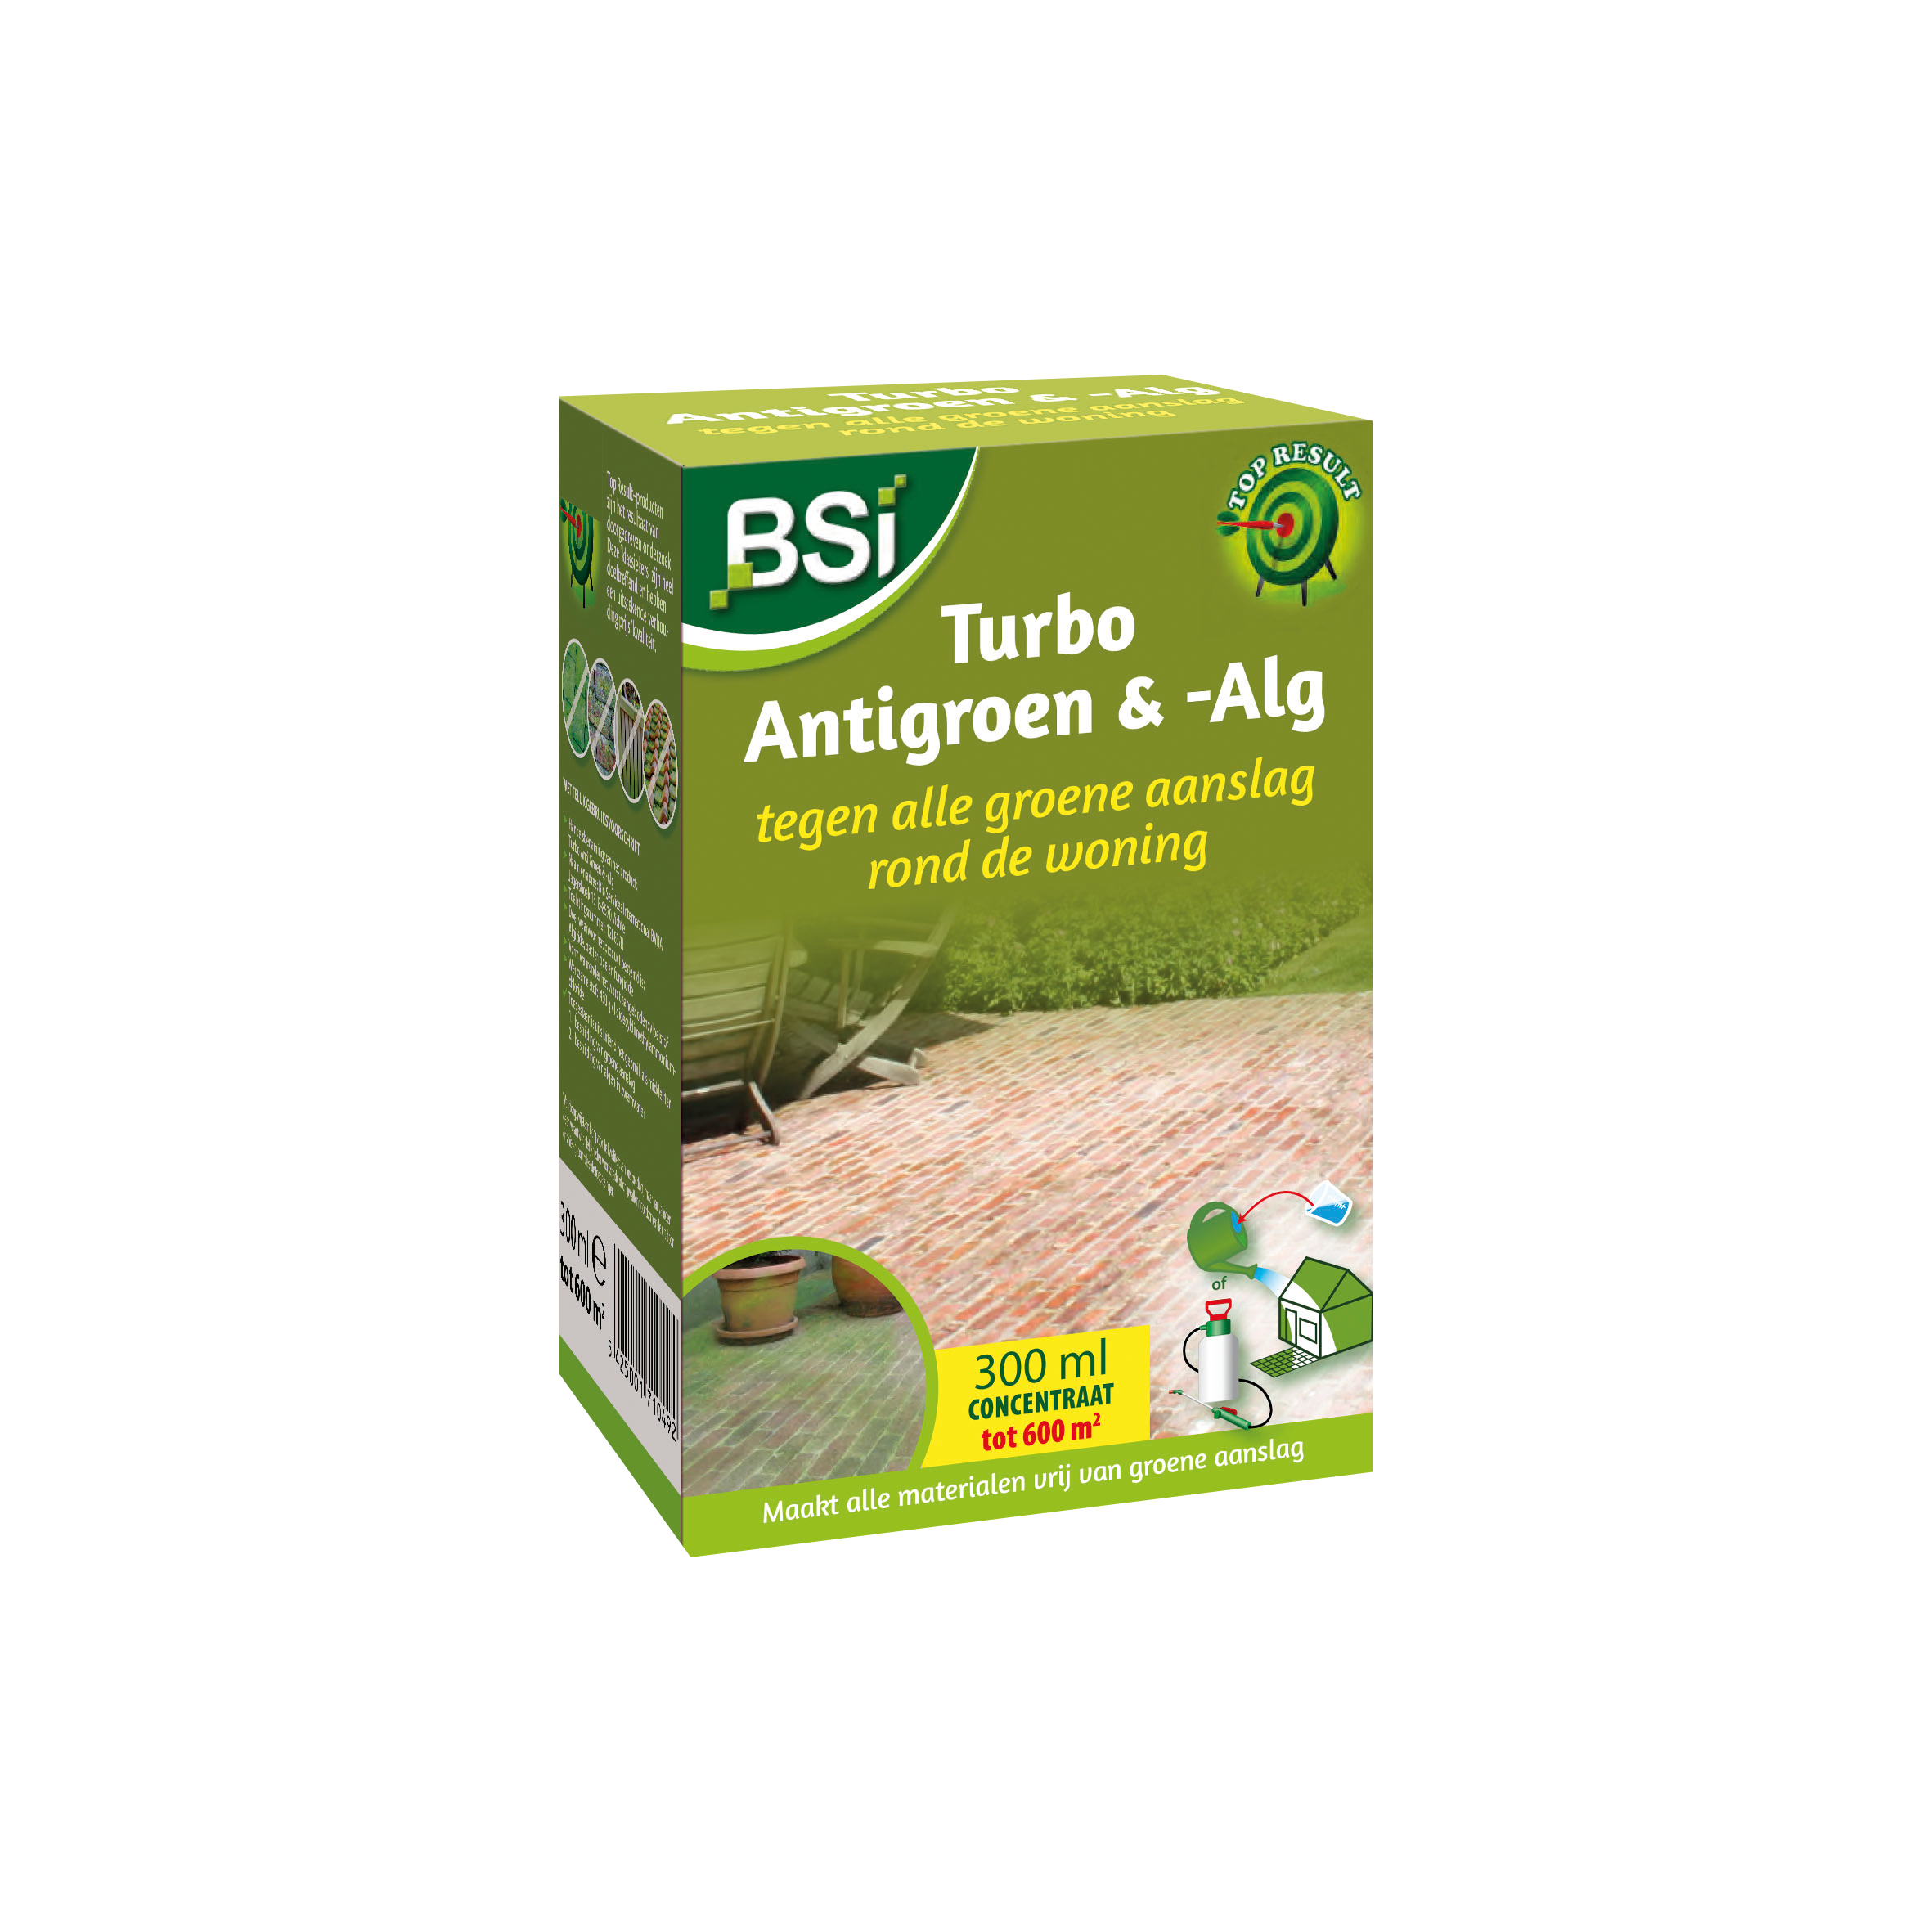 Turbo Anti-groen & -Alg 300 ml (NL) image